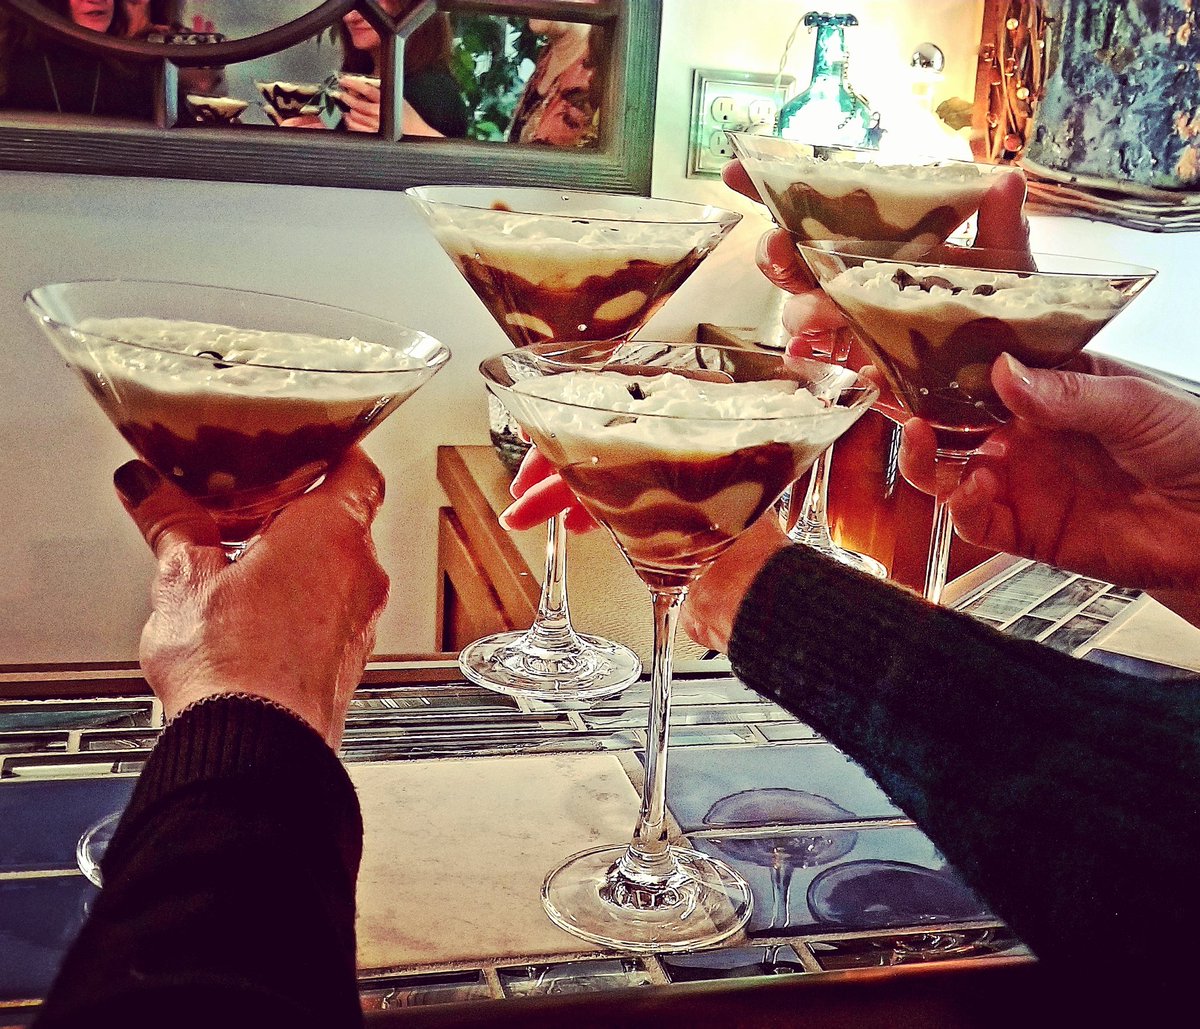 #martinitime #martini🍸 #martiniglasses #martinique #martiniglass #chocolatemartini #martinis #irishchocolatetrufflemartini #chocolate #hersheysyrup #juliannaglassware @Julianna_glass